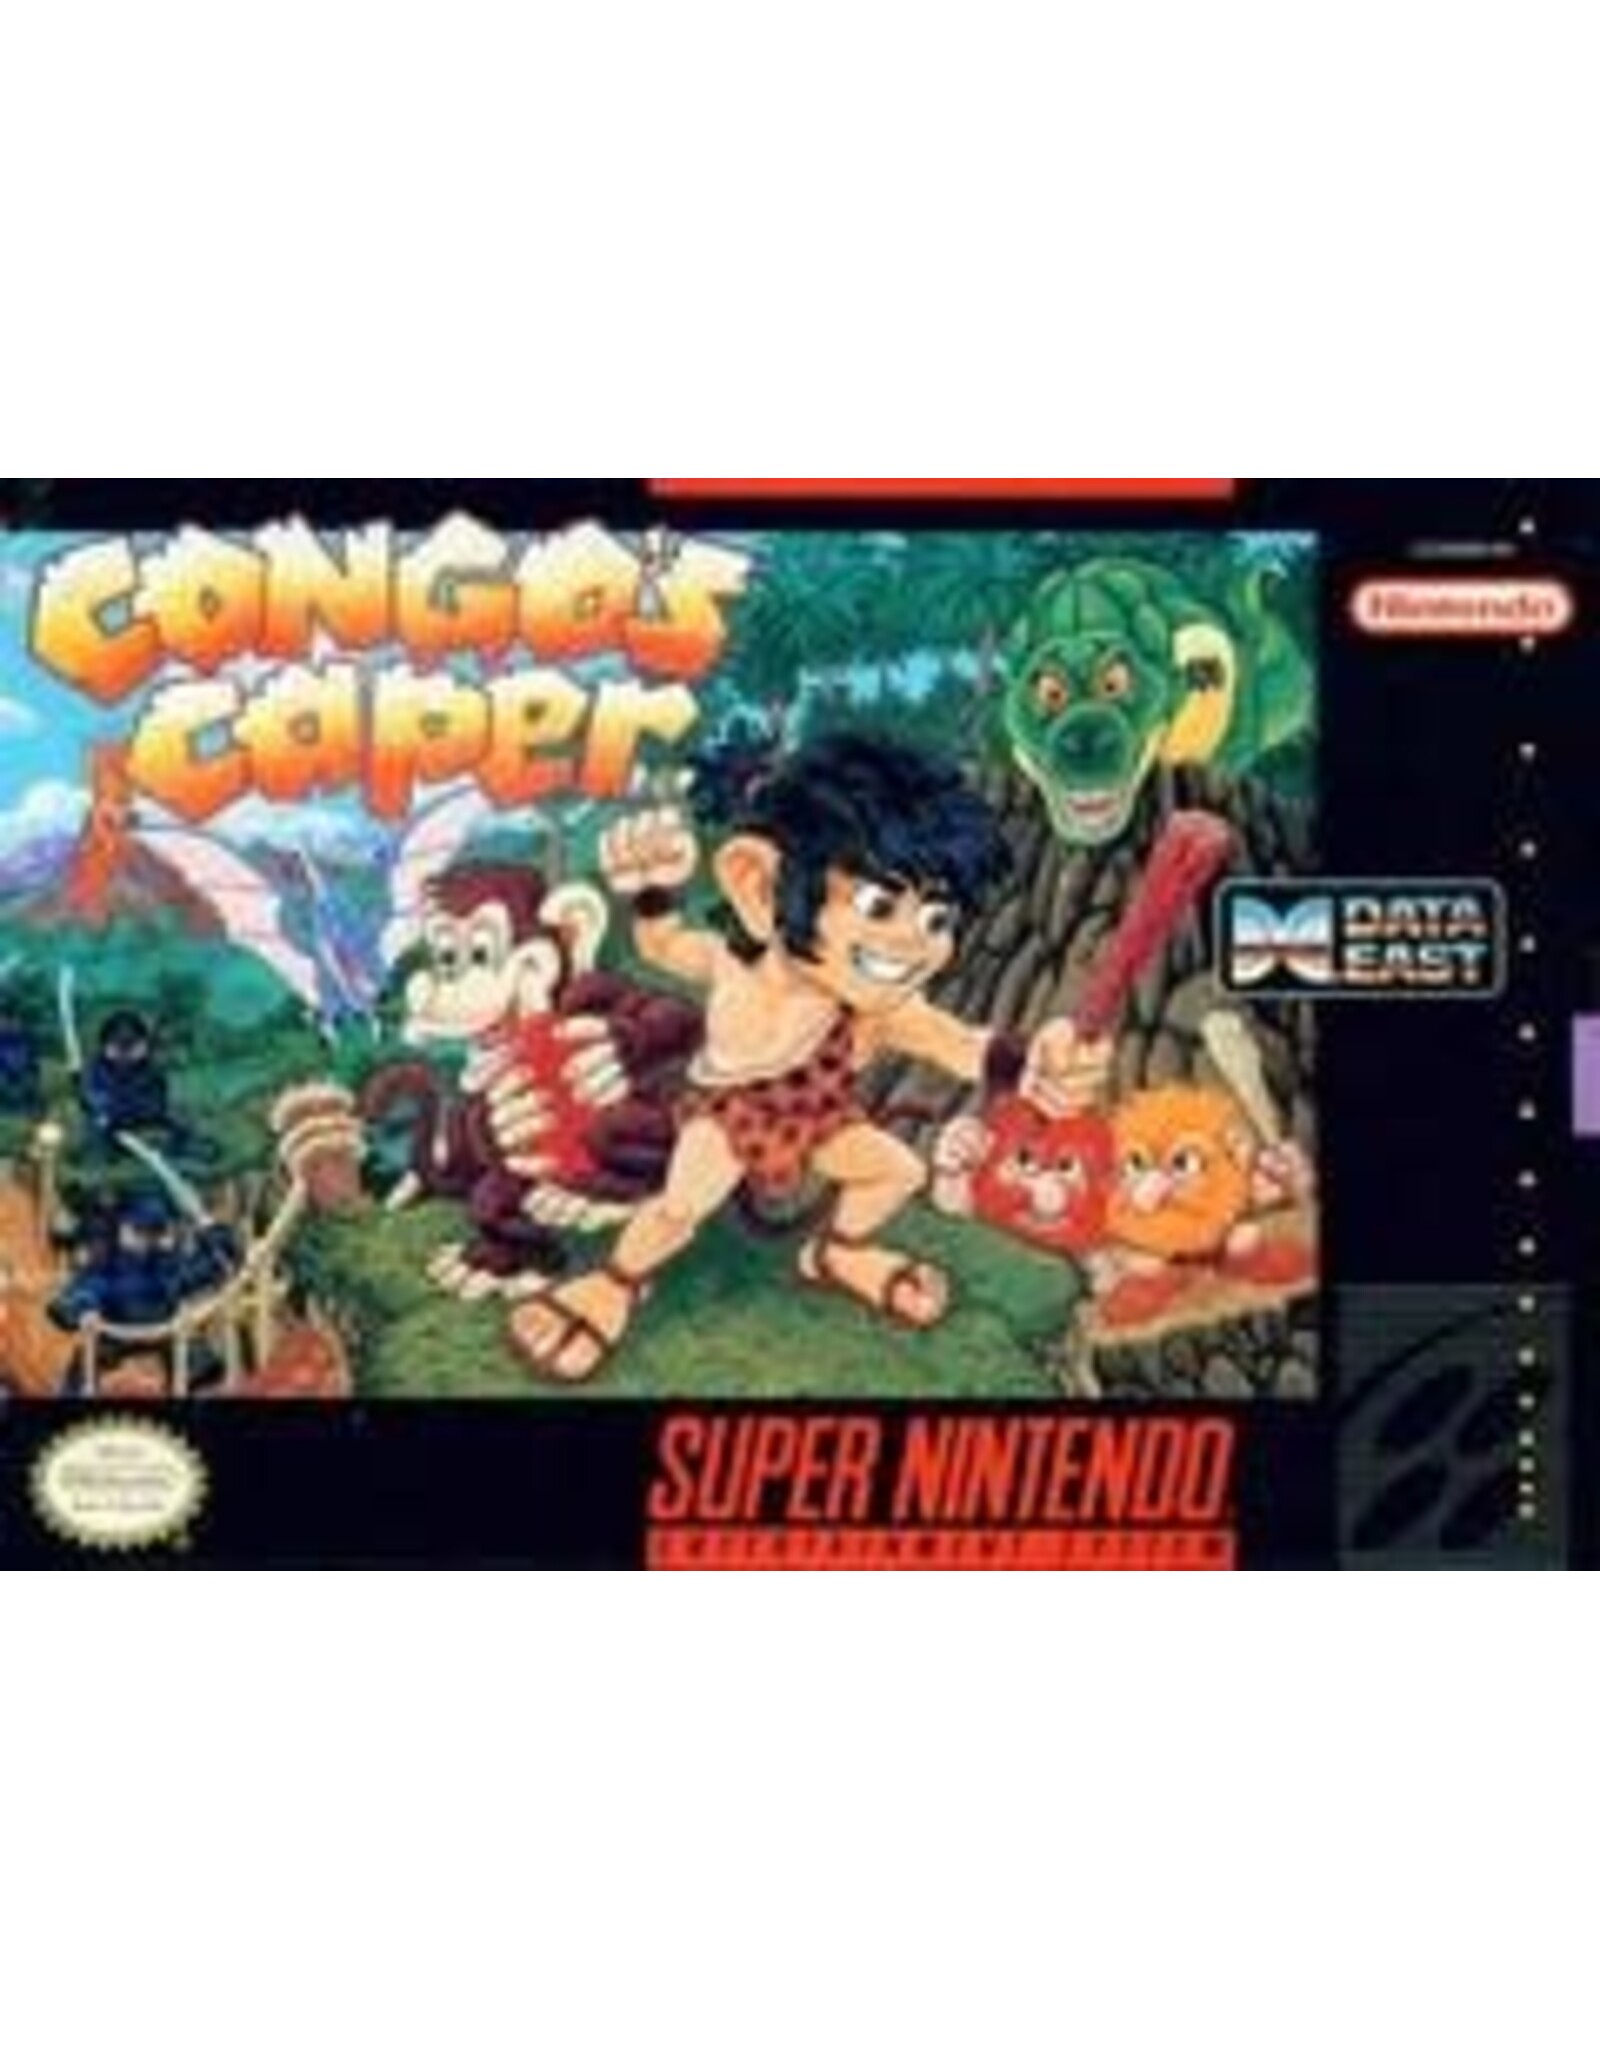 Super Nintendo Congo's Caper (Minor Damaged Box, No Manual, Damaged Cart Back Label)